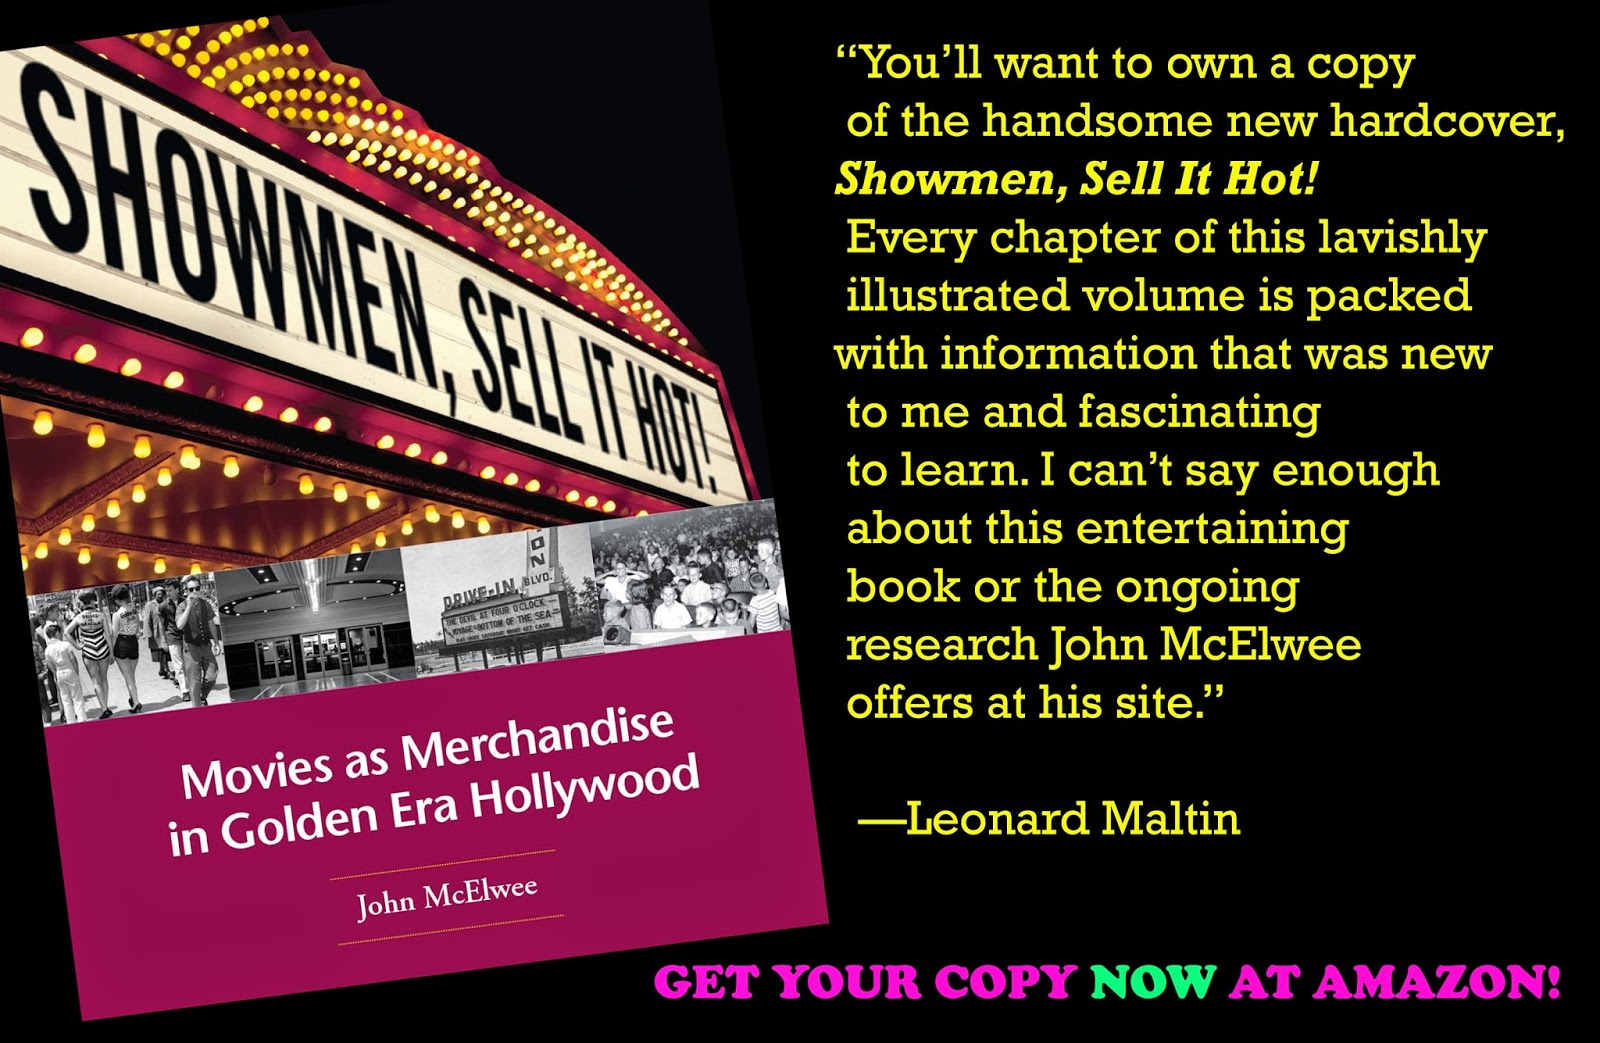 http://www.amazon.com/Showmen-Sell-Hot-Merchandise-Hollywood/dp/0971168598/ref=sr_1_1?s=books&ie=UTF8&qid=1397141332&sr=1-1&keywords=showmen+sell+it+hot